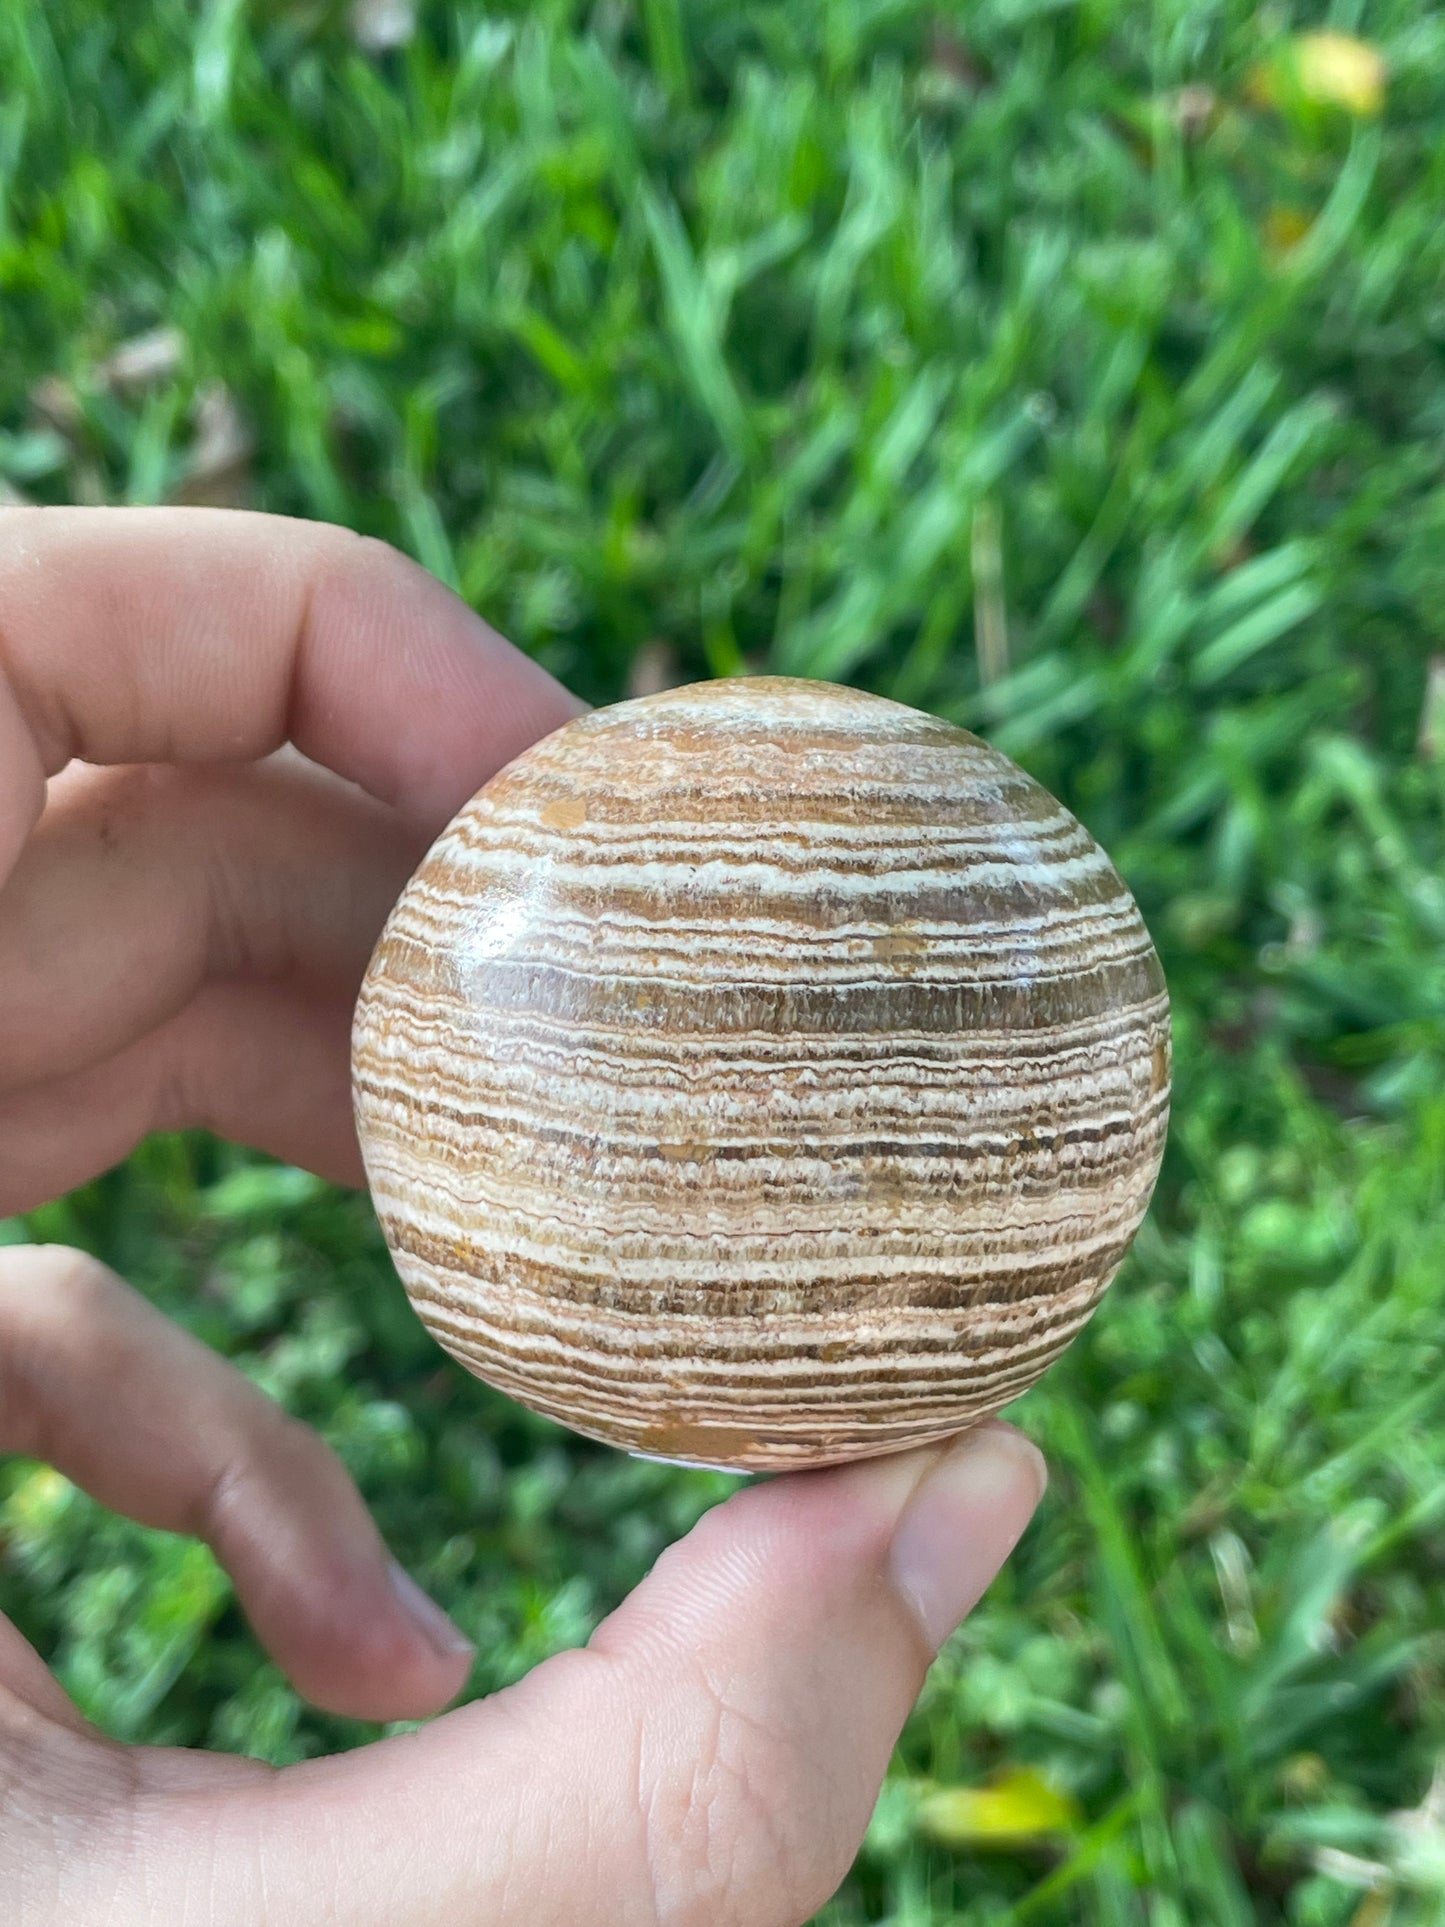 Aragonite Sphere